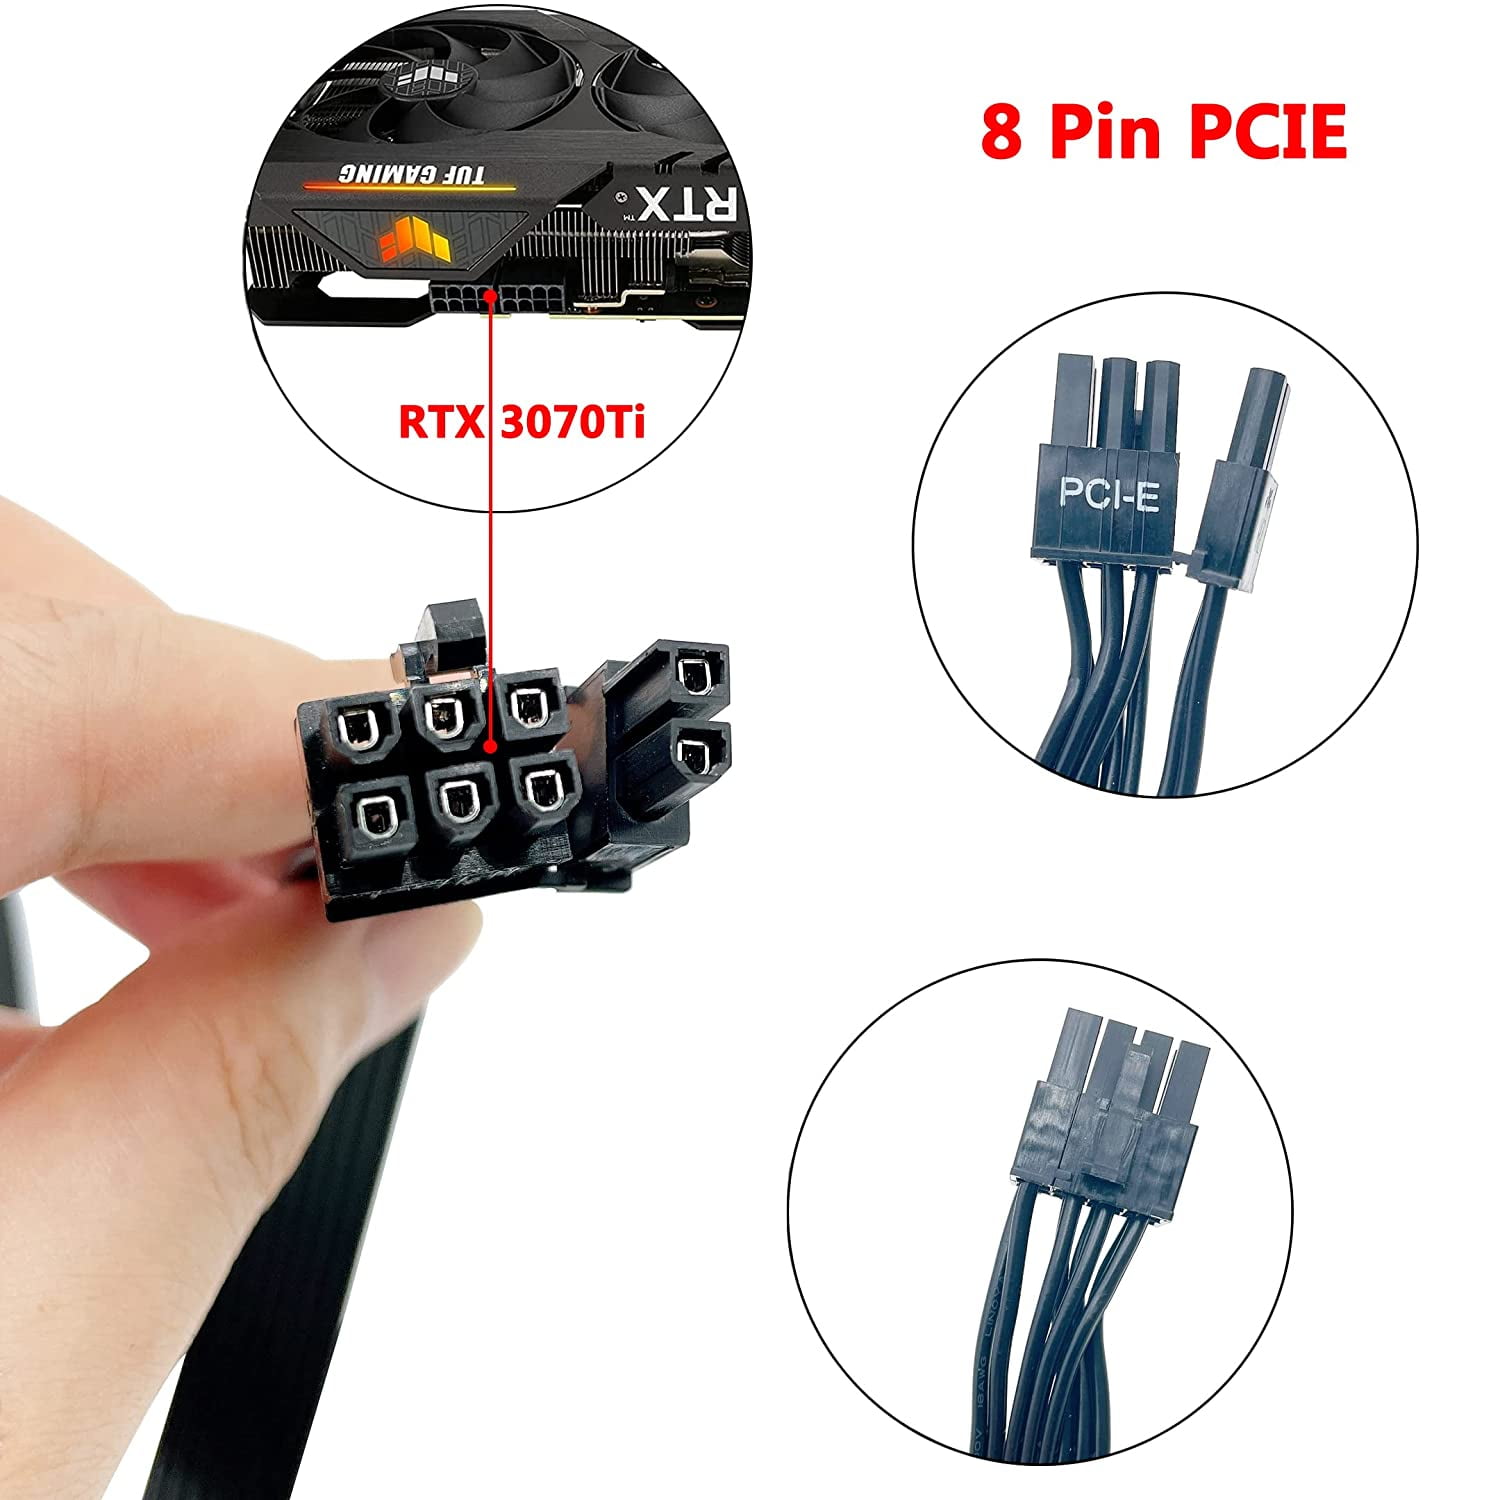 Câble alimentation PC PCIExpress 6 pin vers 8 pin Goobay